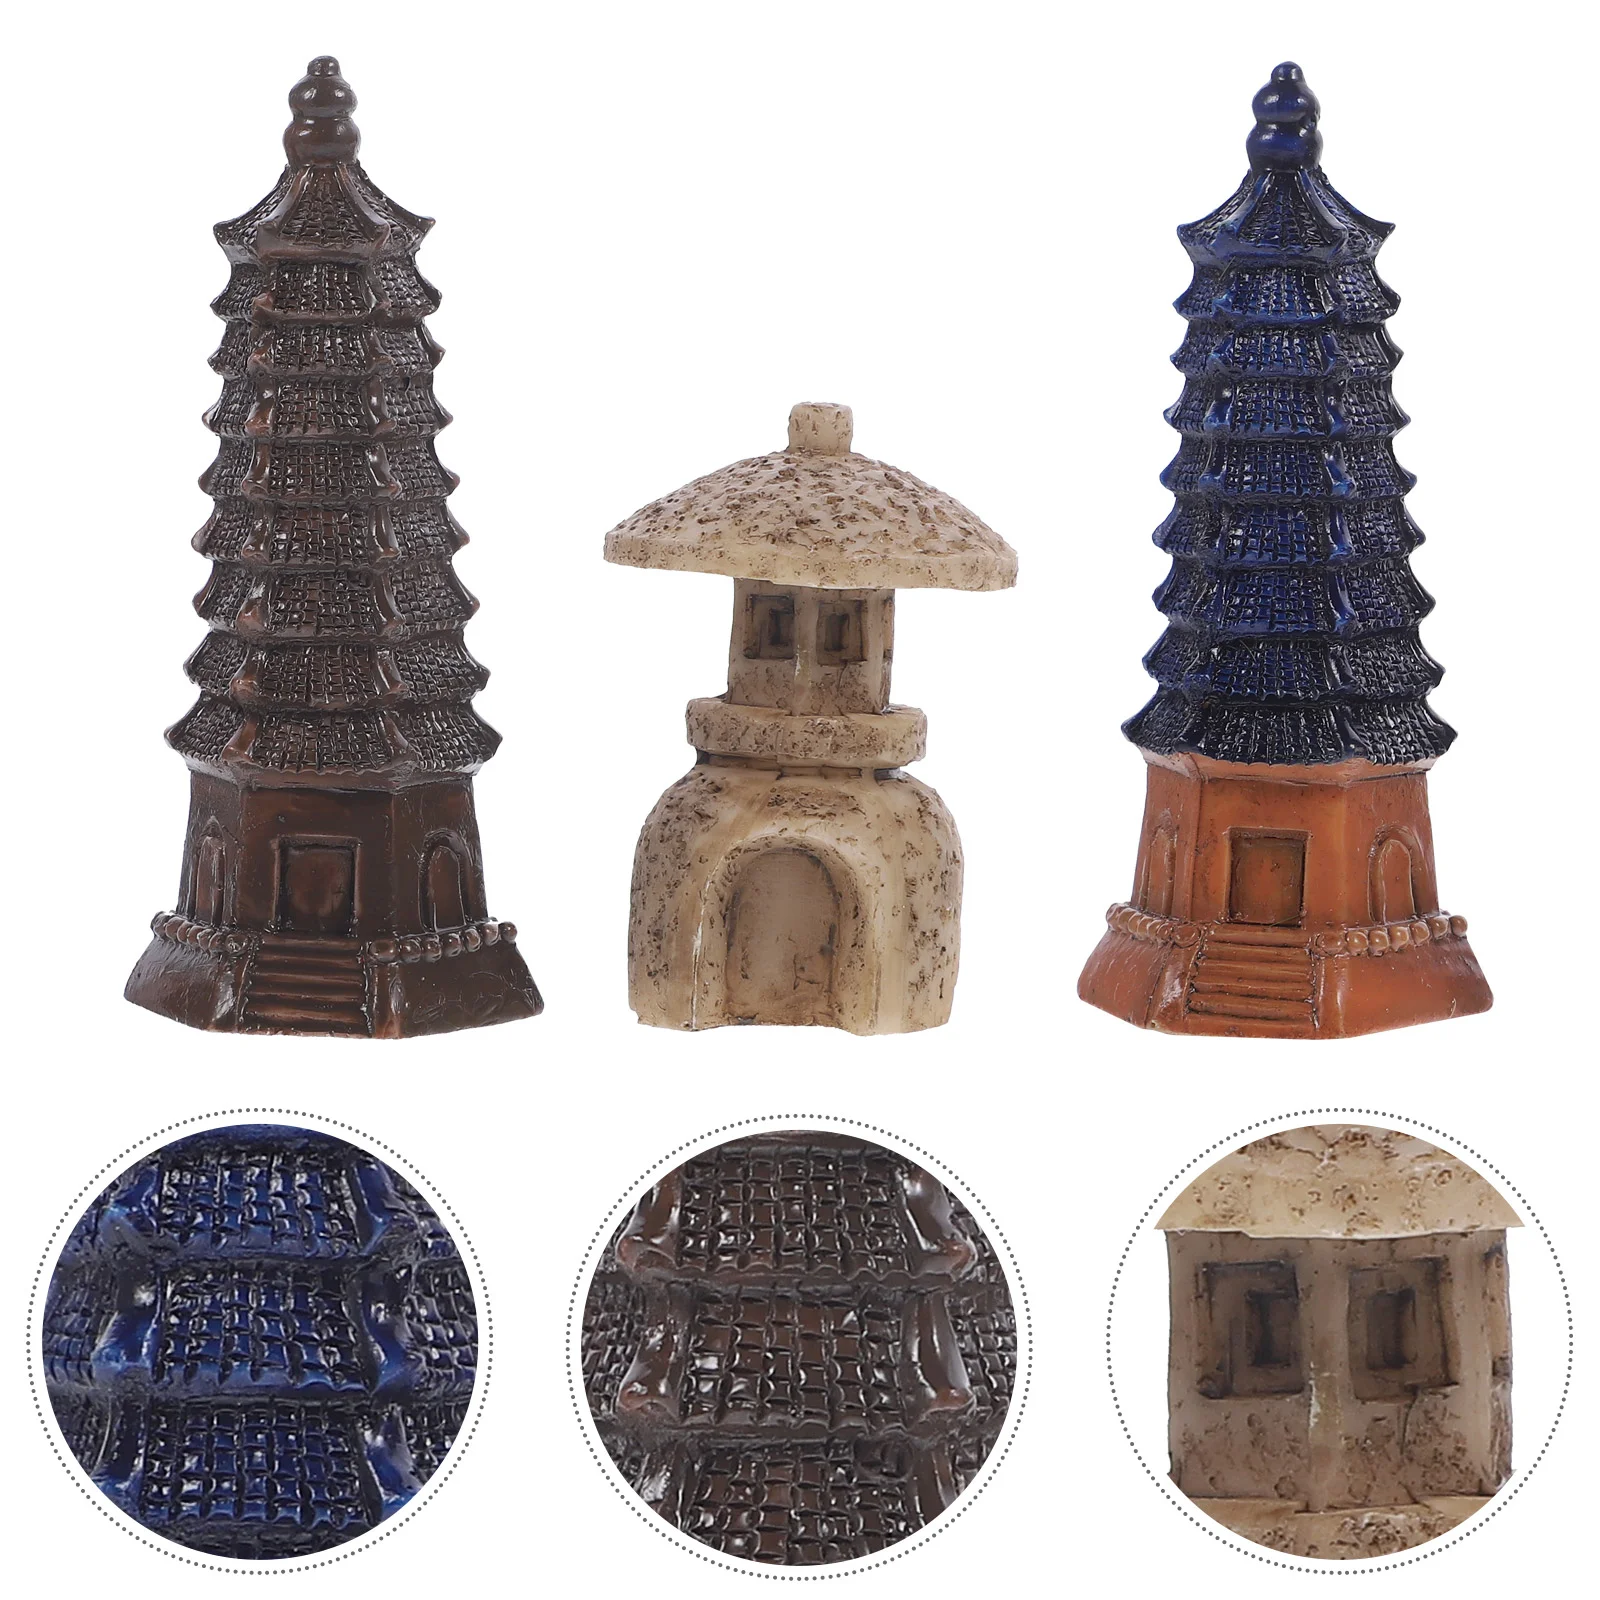 

3 Pcs Travel Souvenirs Gift Vintage Home Decor Pavilion Ornament Simulation Pagoda Model Tabletop Miniature Decorate Tiny